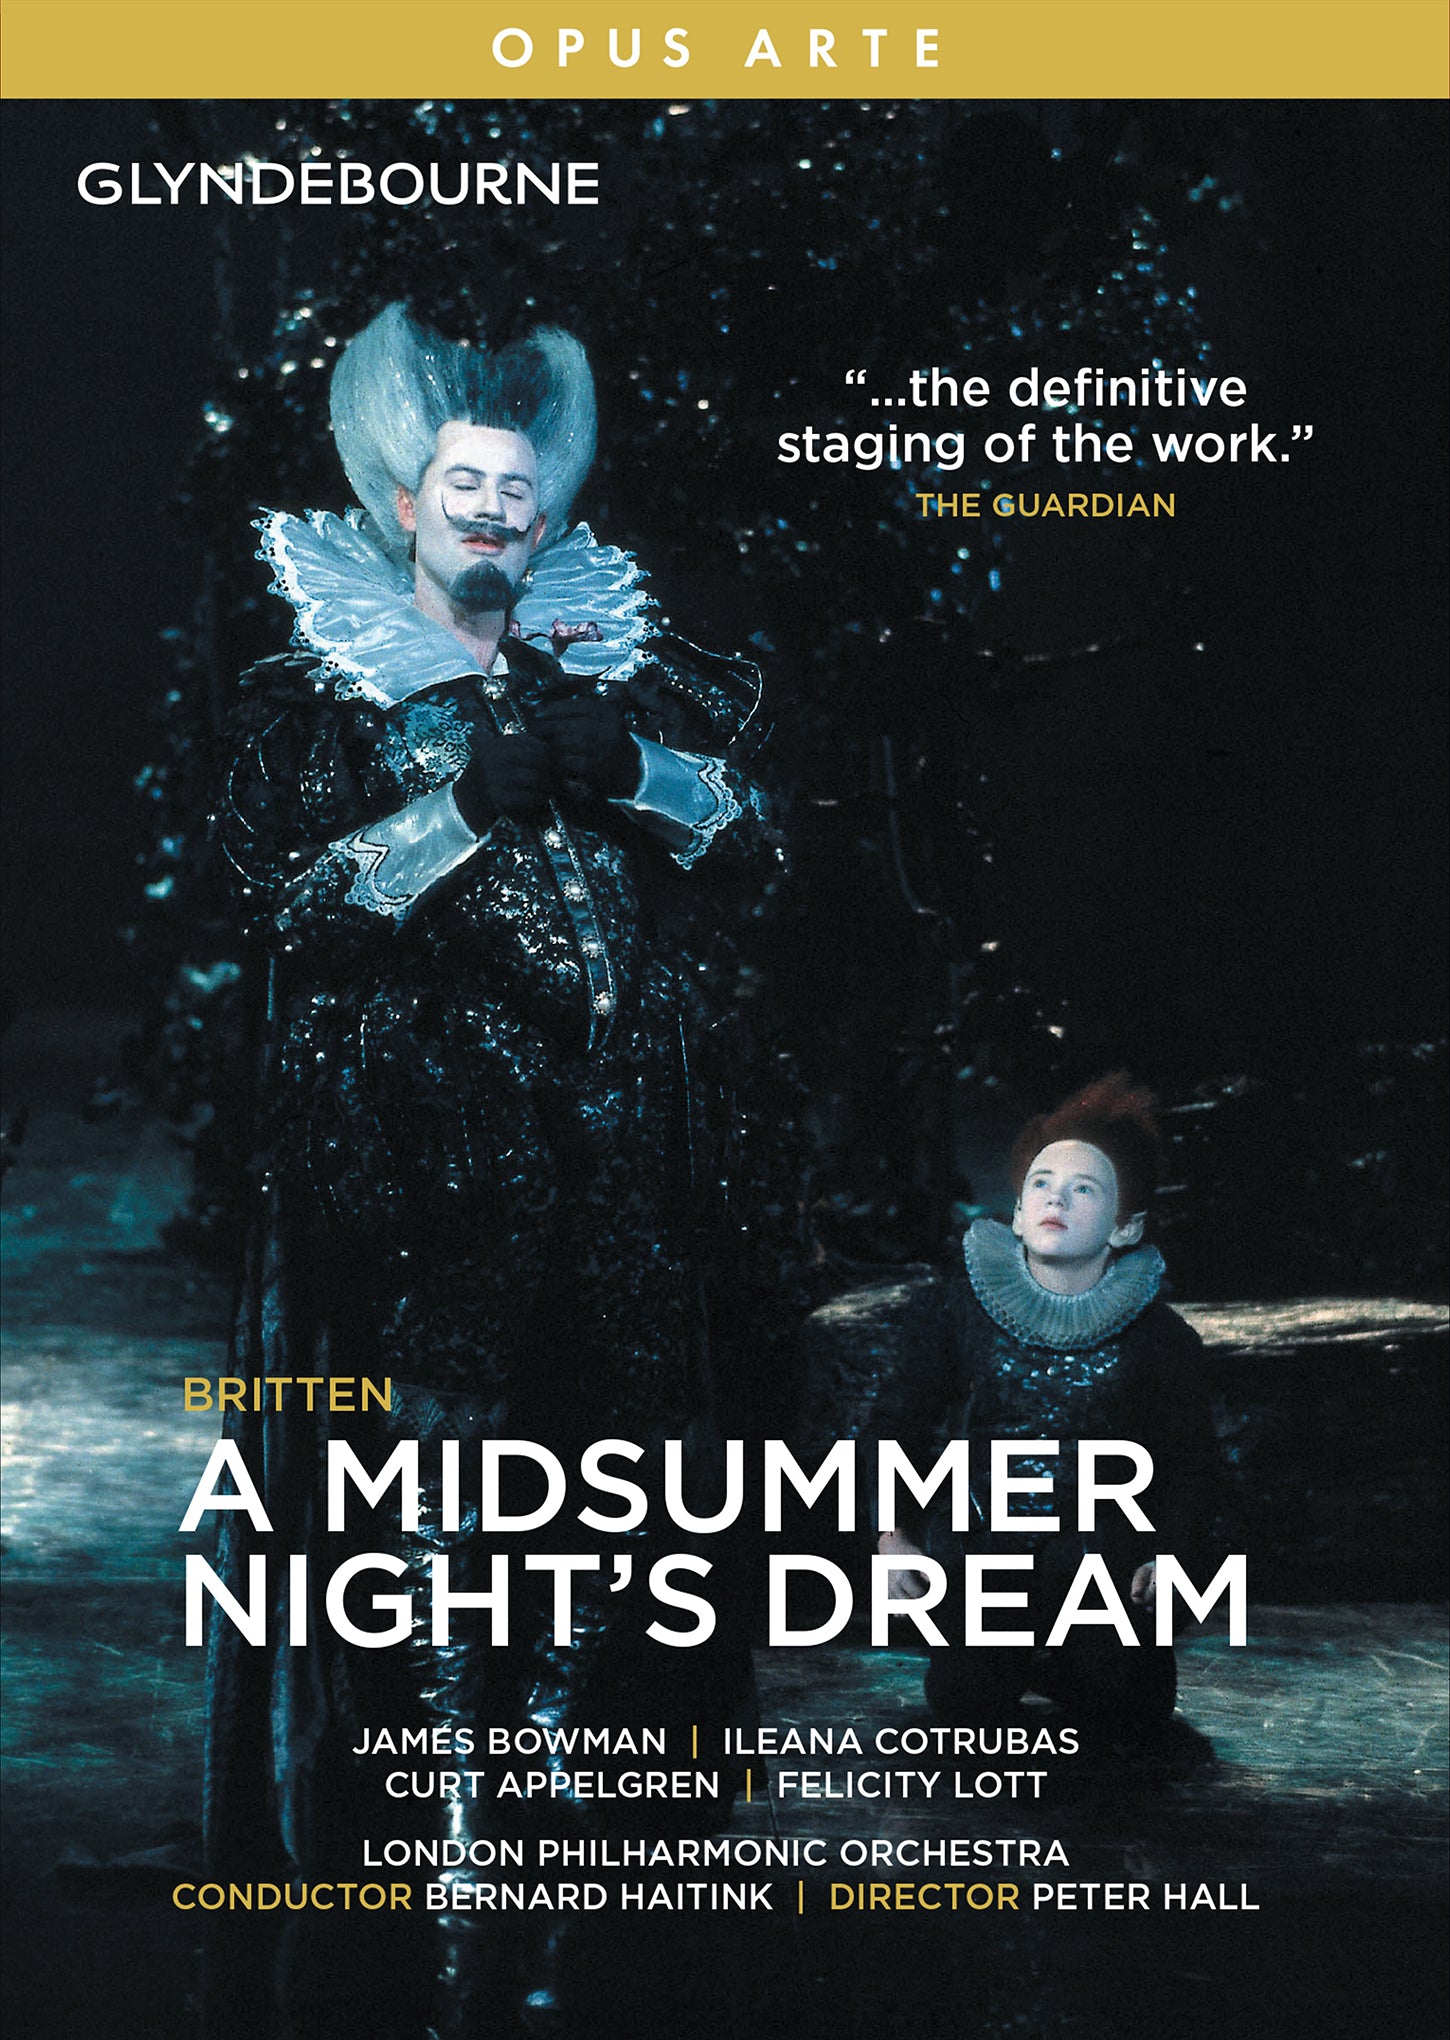 Britten: A Midsummer Night's Dream at Glyndebourne / Haitink, London Philharmonic